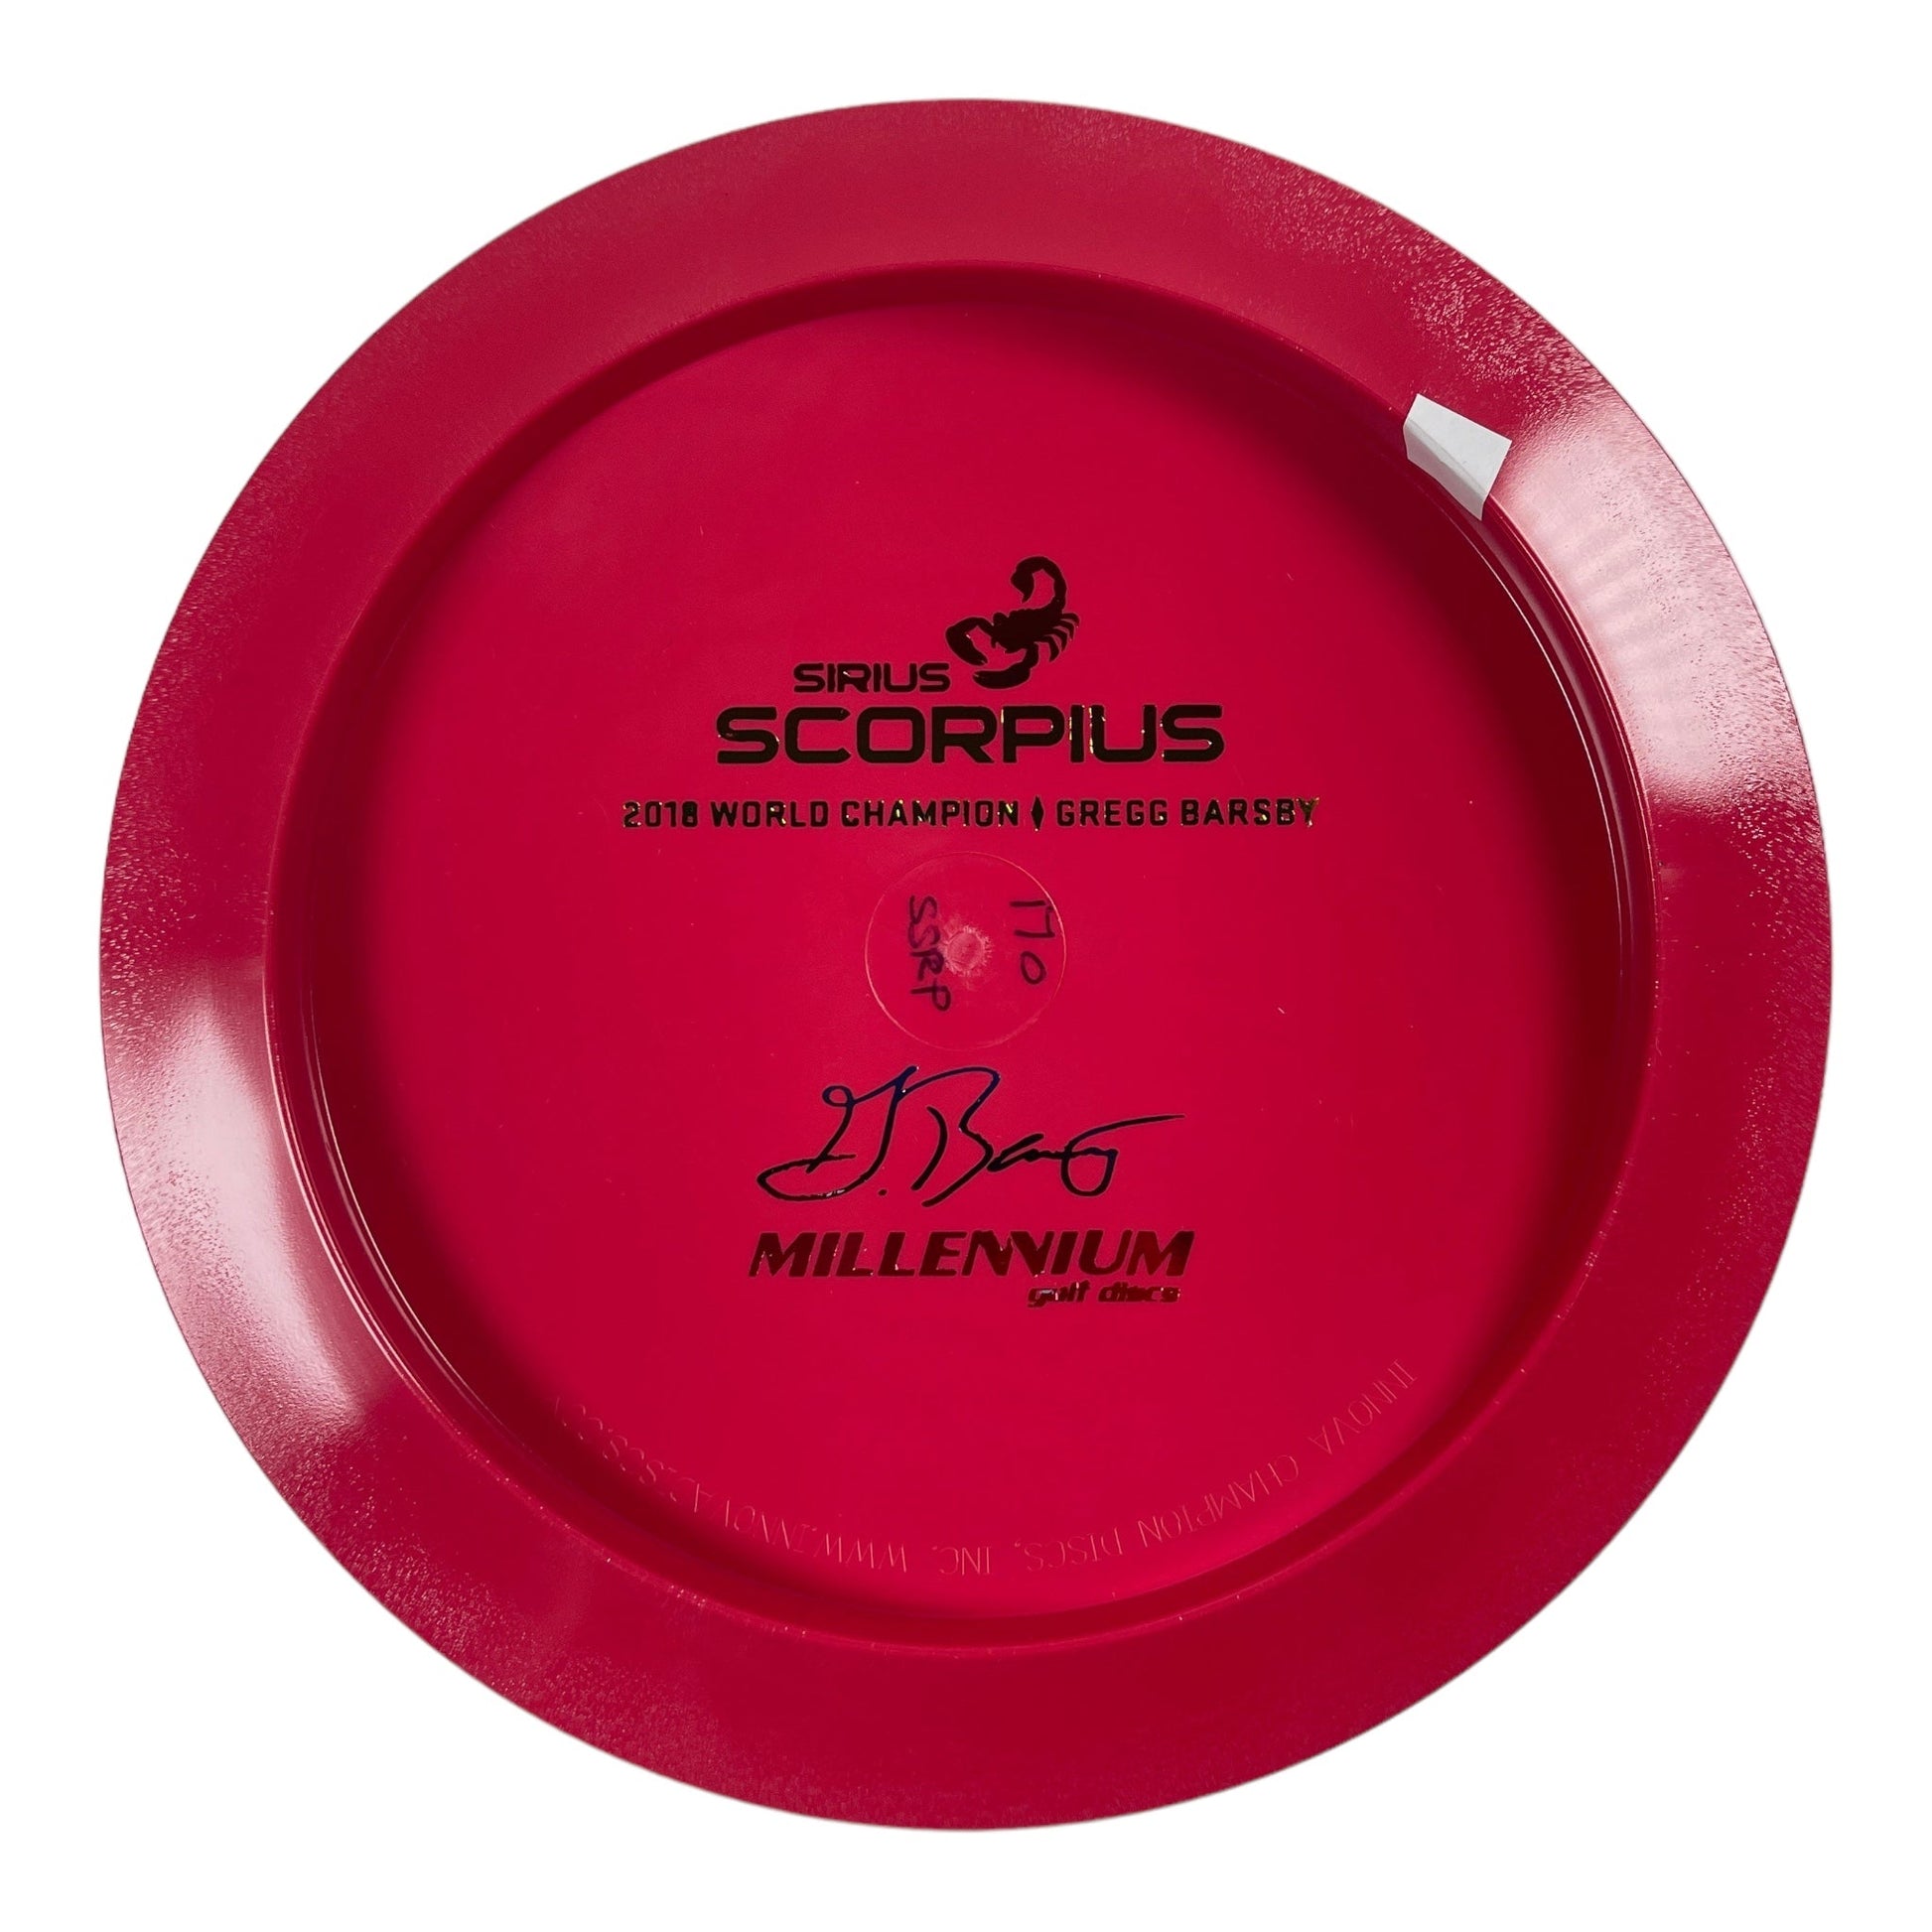 Millennium Golf Discs Scorpius | Sirius | Red/Rainbow 170-175g (Gregg Barsby) Disc Golf